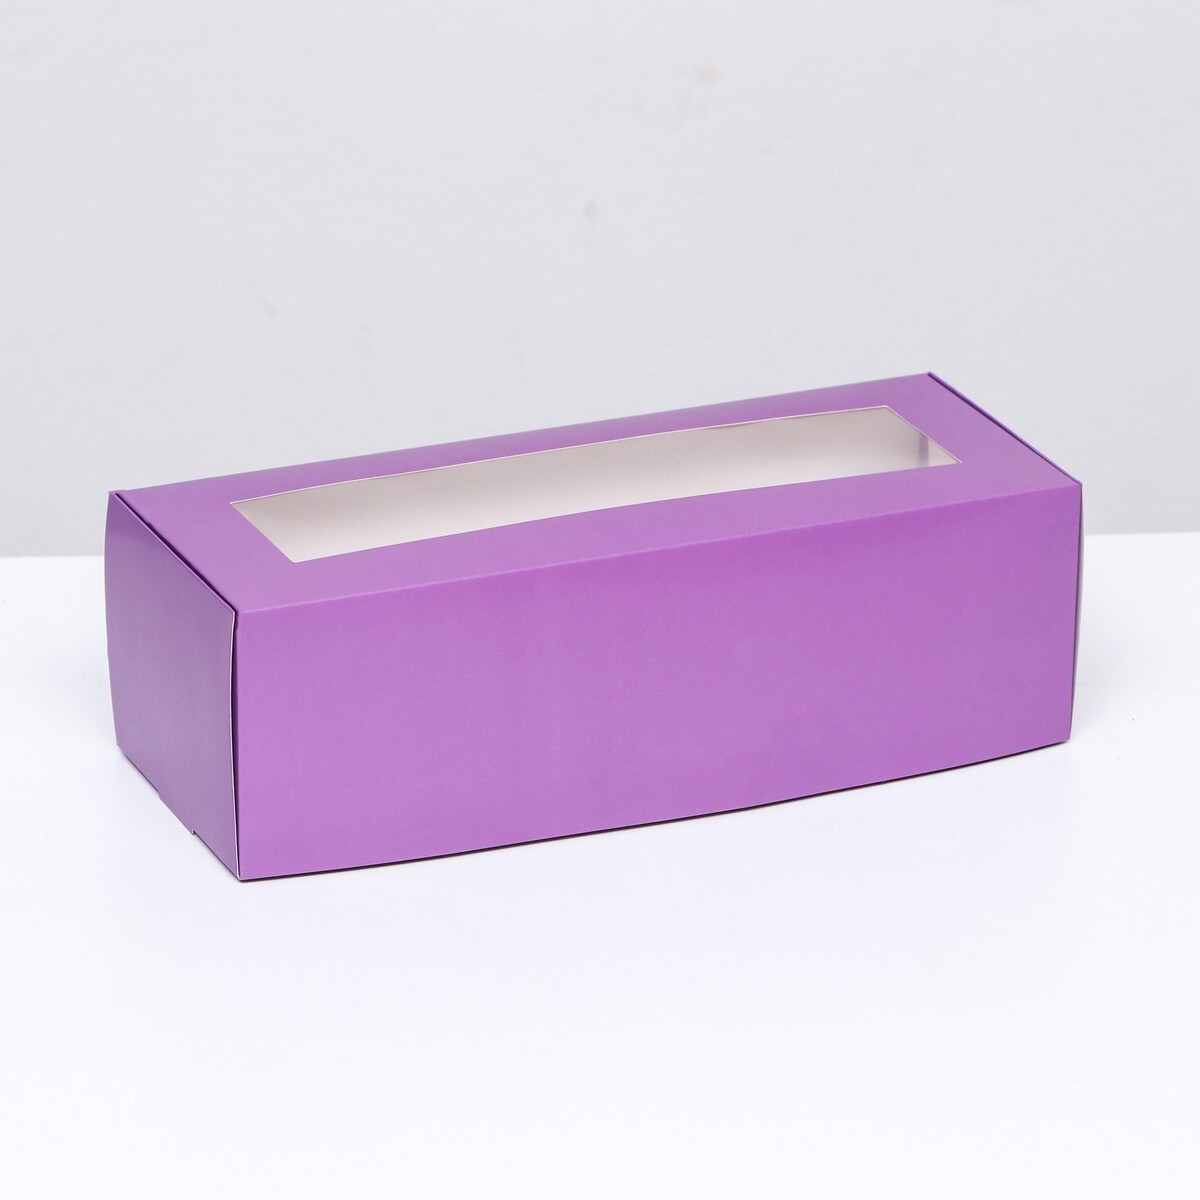 Коробка складная с окном под рулет, сиреневая, 26 х 10 х 8 см коробка под рулет с ручками белая 16 5 х 11 х 10 см